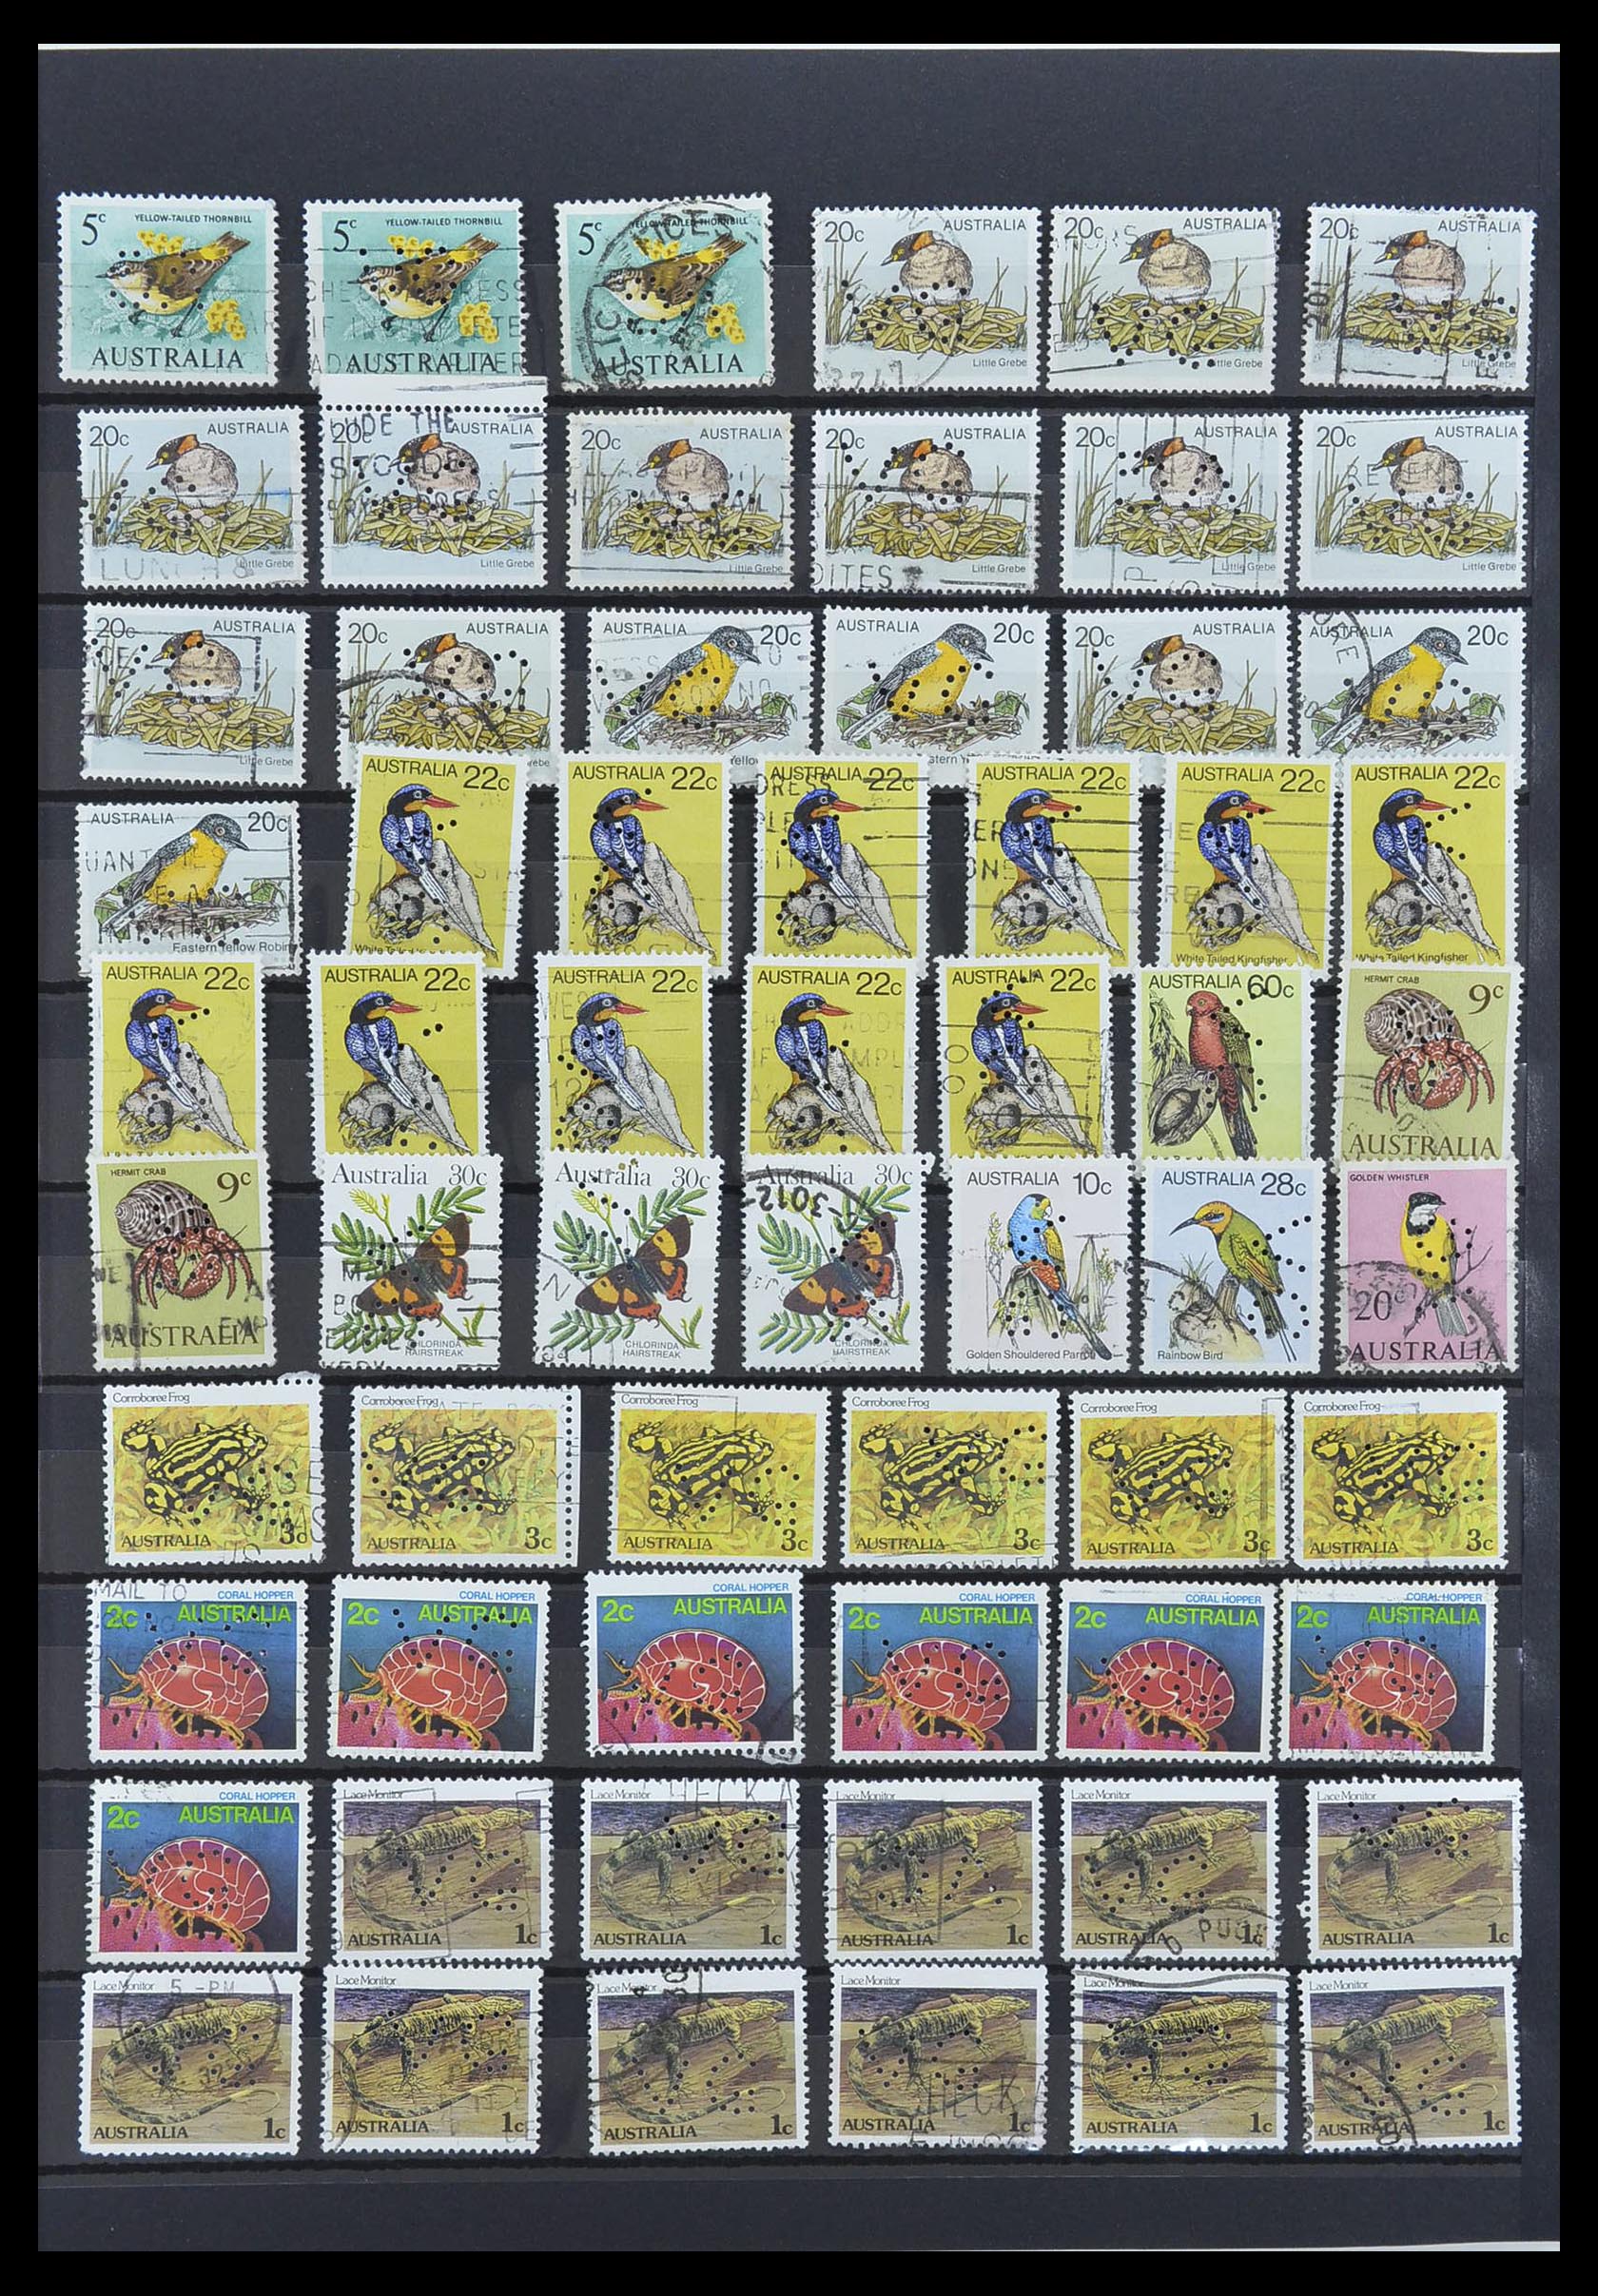 33510 007 - Stamp collection 33510 Australia perfins 1900-1970.